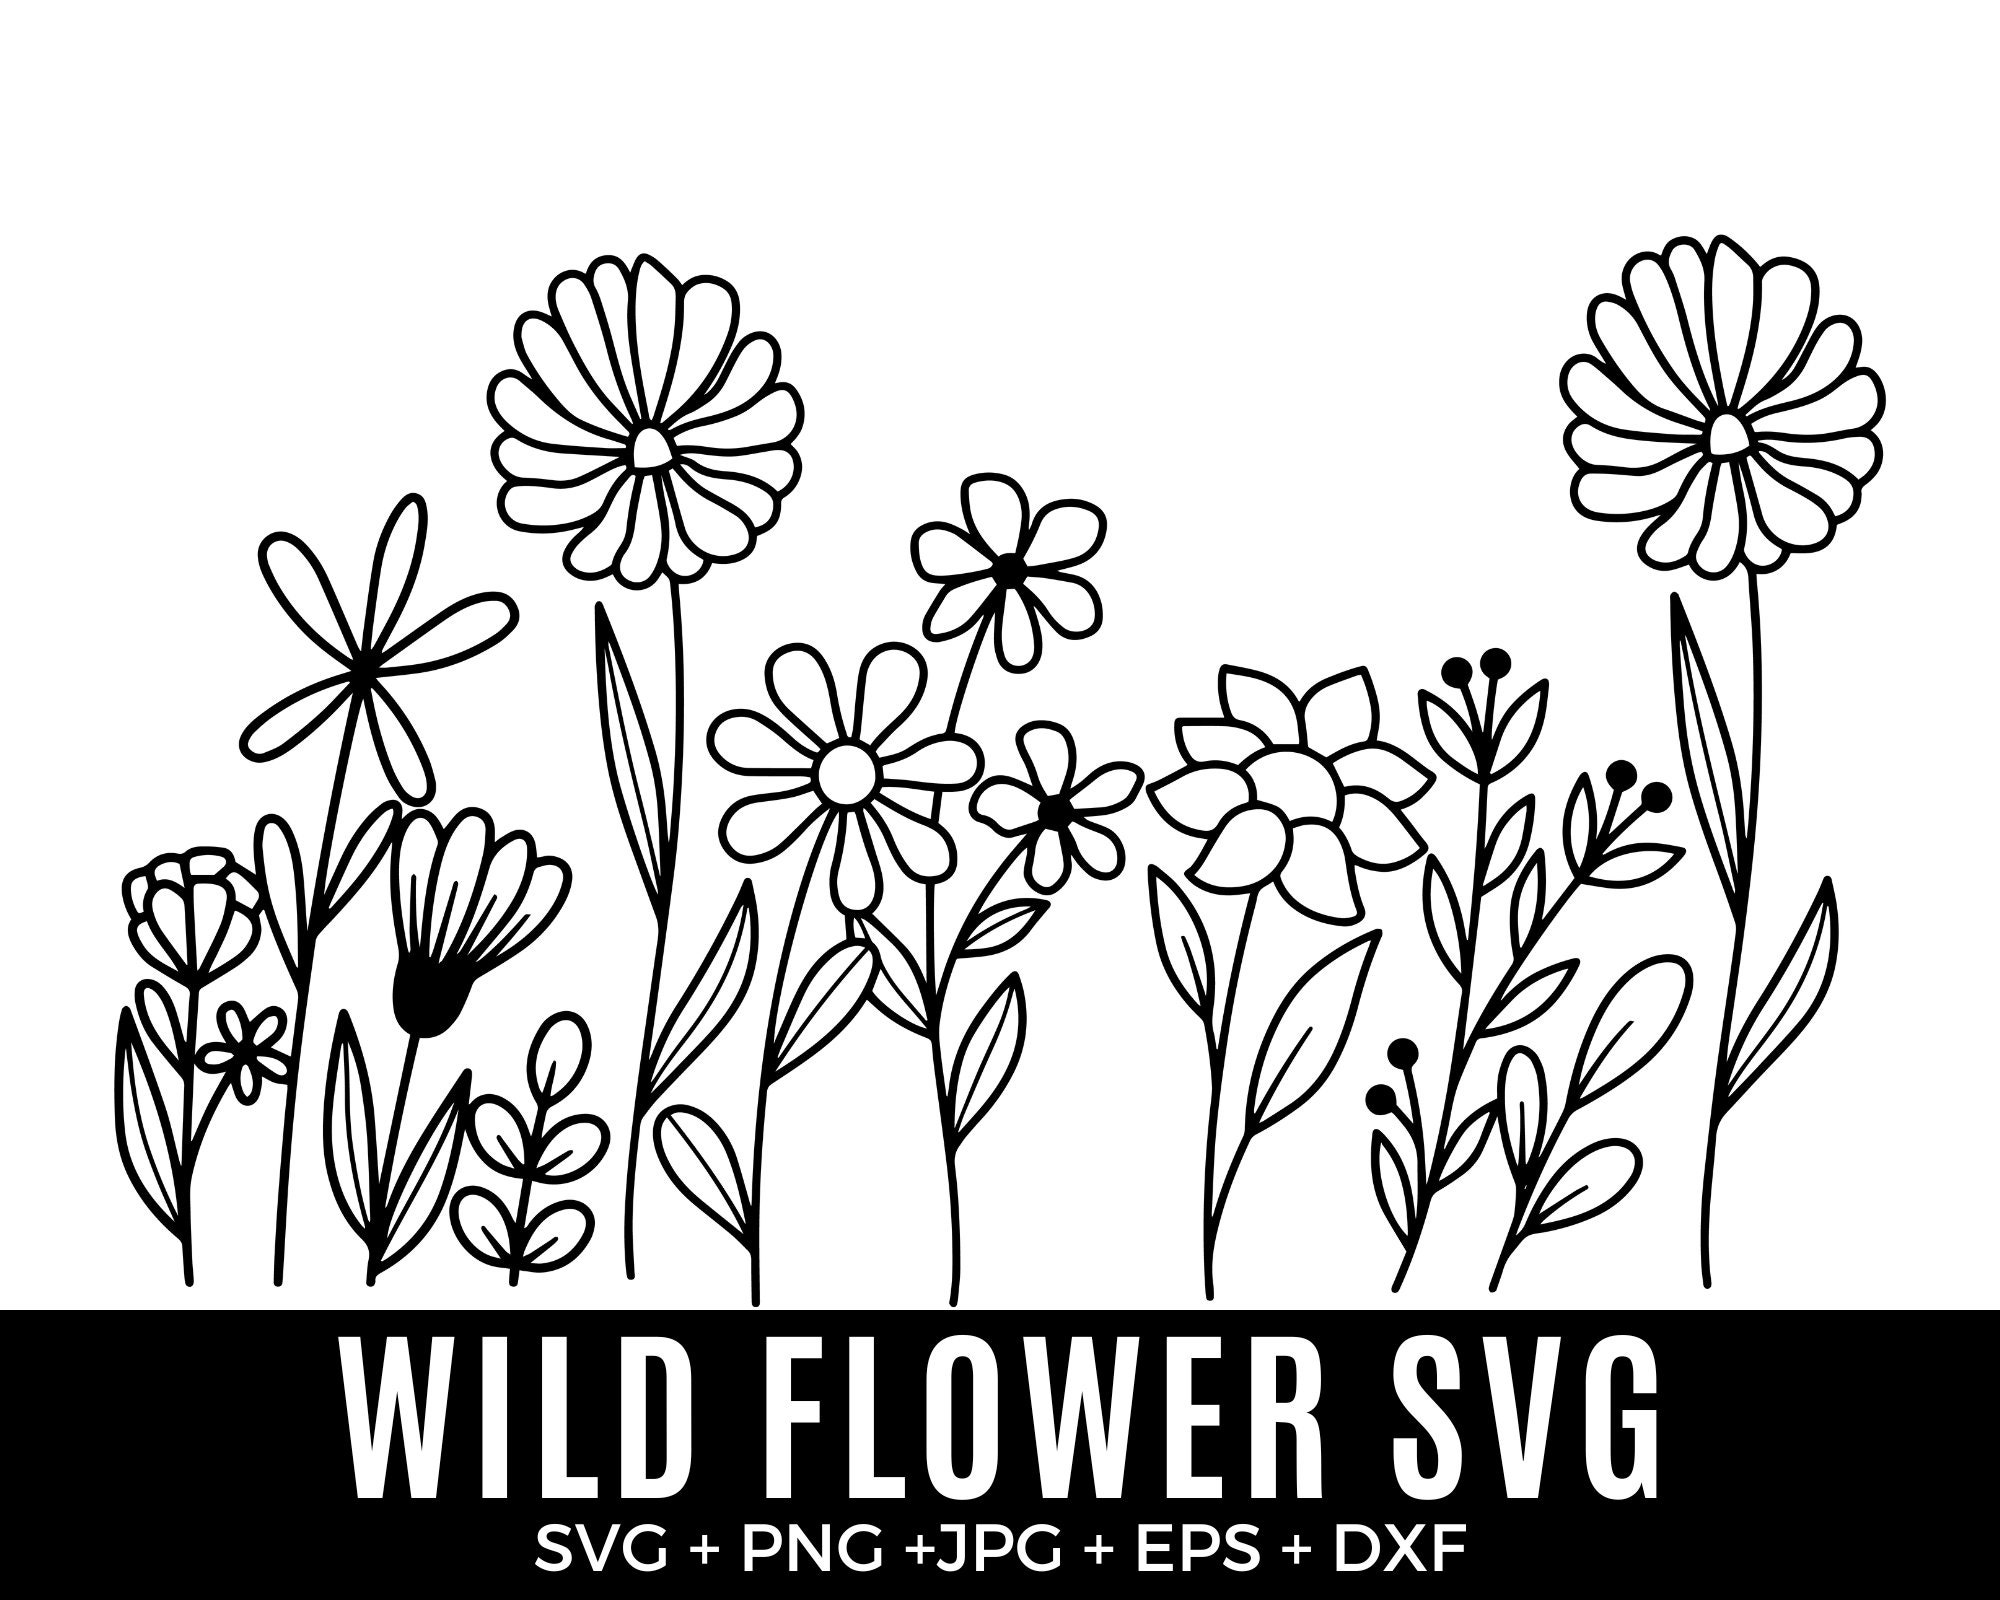 Wild Herbs. Wildflowers in Summer. Vector Color Flowers Clipart -   Denmark  Цветочное искусство, Цветы акварелью, Ботанические рисунки